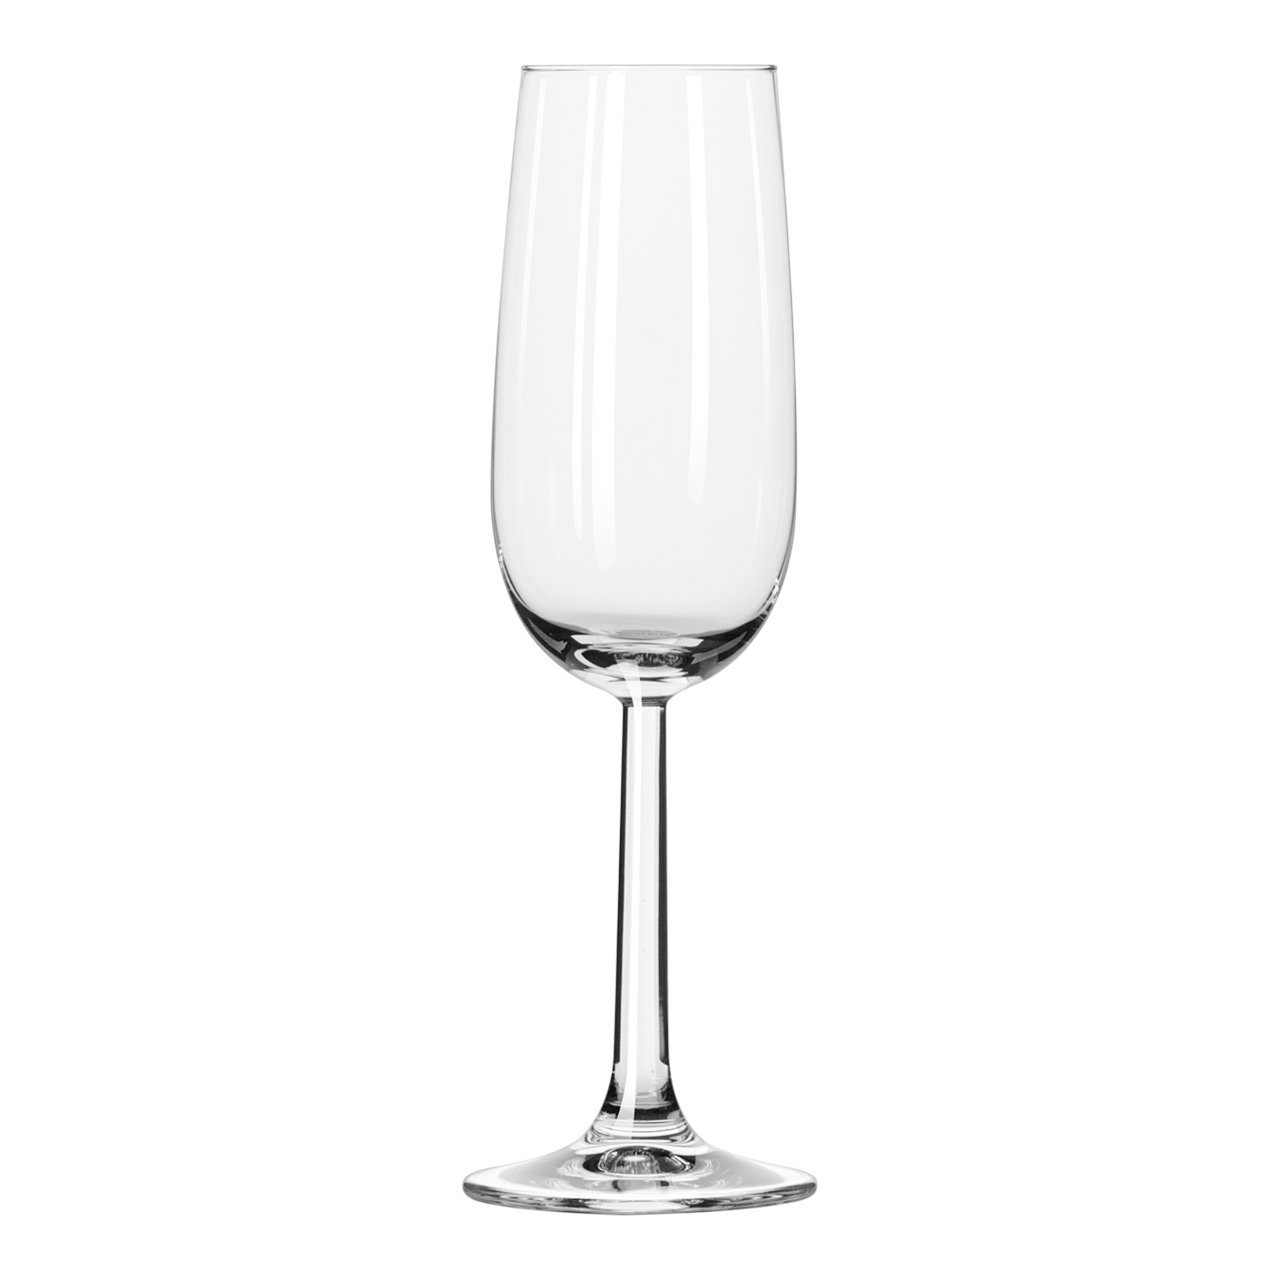 Shinkan kromme Elektropositief Royal Leerdam Bouquet Champagneglas 17 cl Doos 6 stuks | Sligro.nl